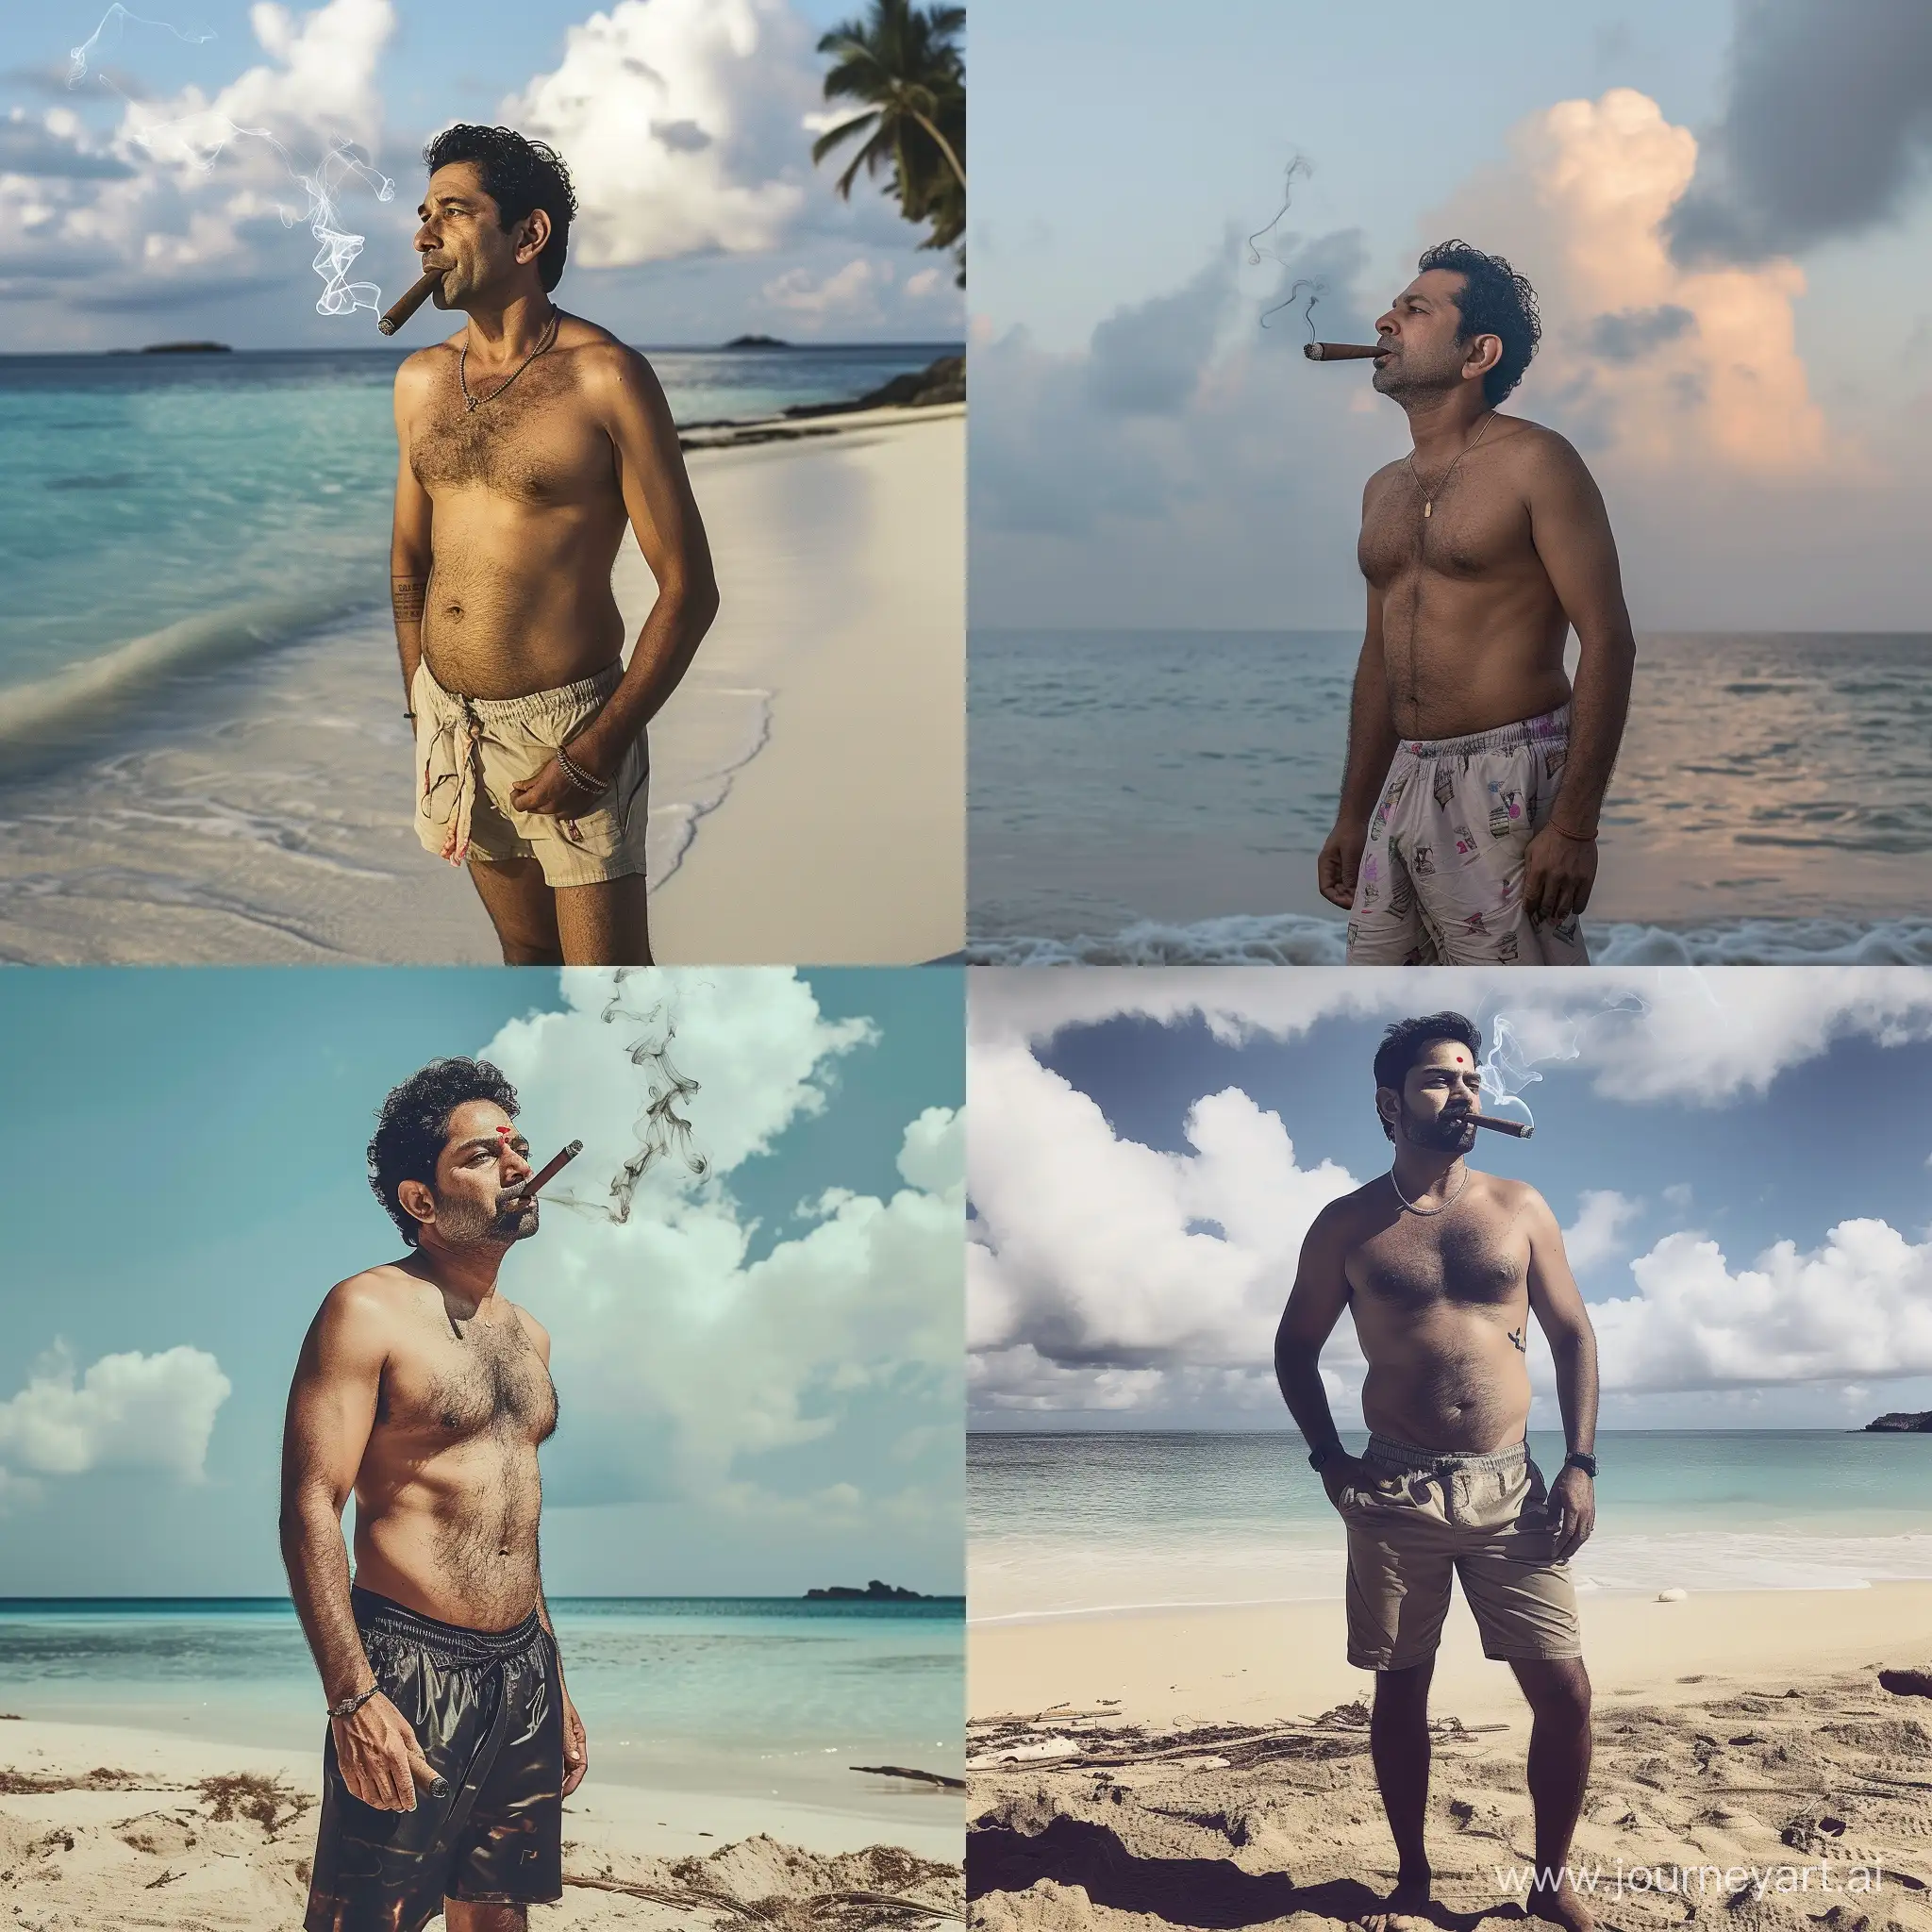 Sachin tendulakar standing on a beach wearing shorts smoking cigar